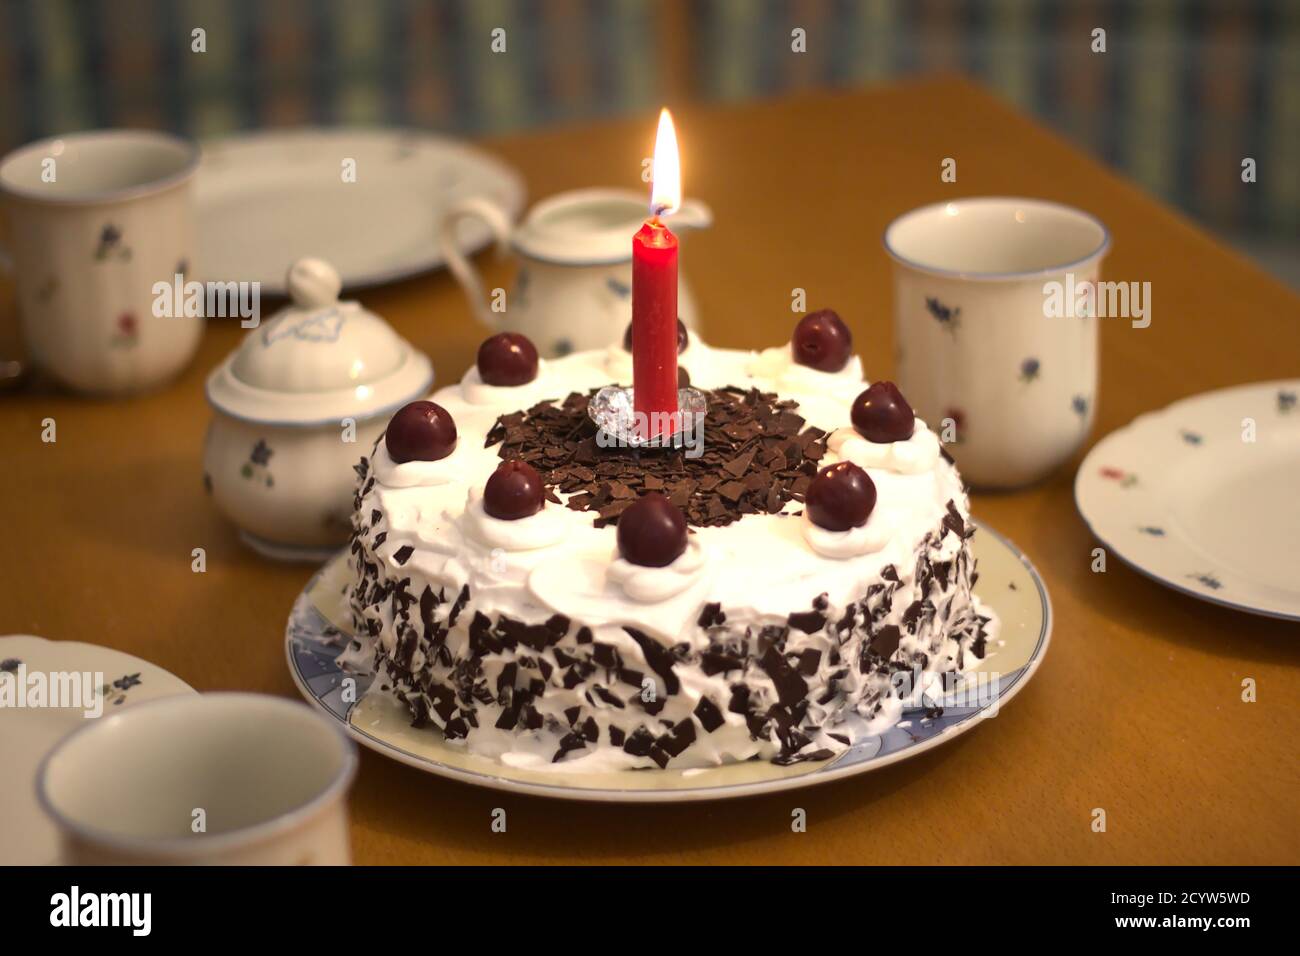 Homemade vegan German black forest cake served on table for birthday Stock Photo